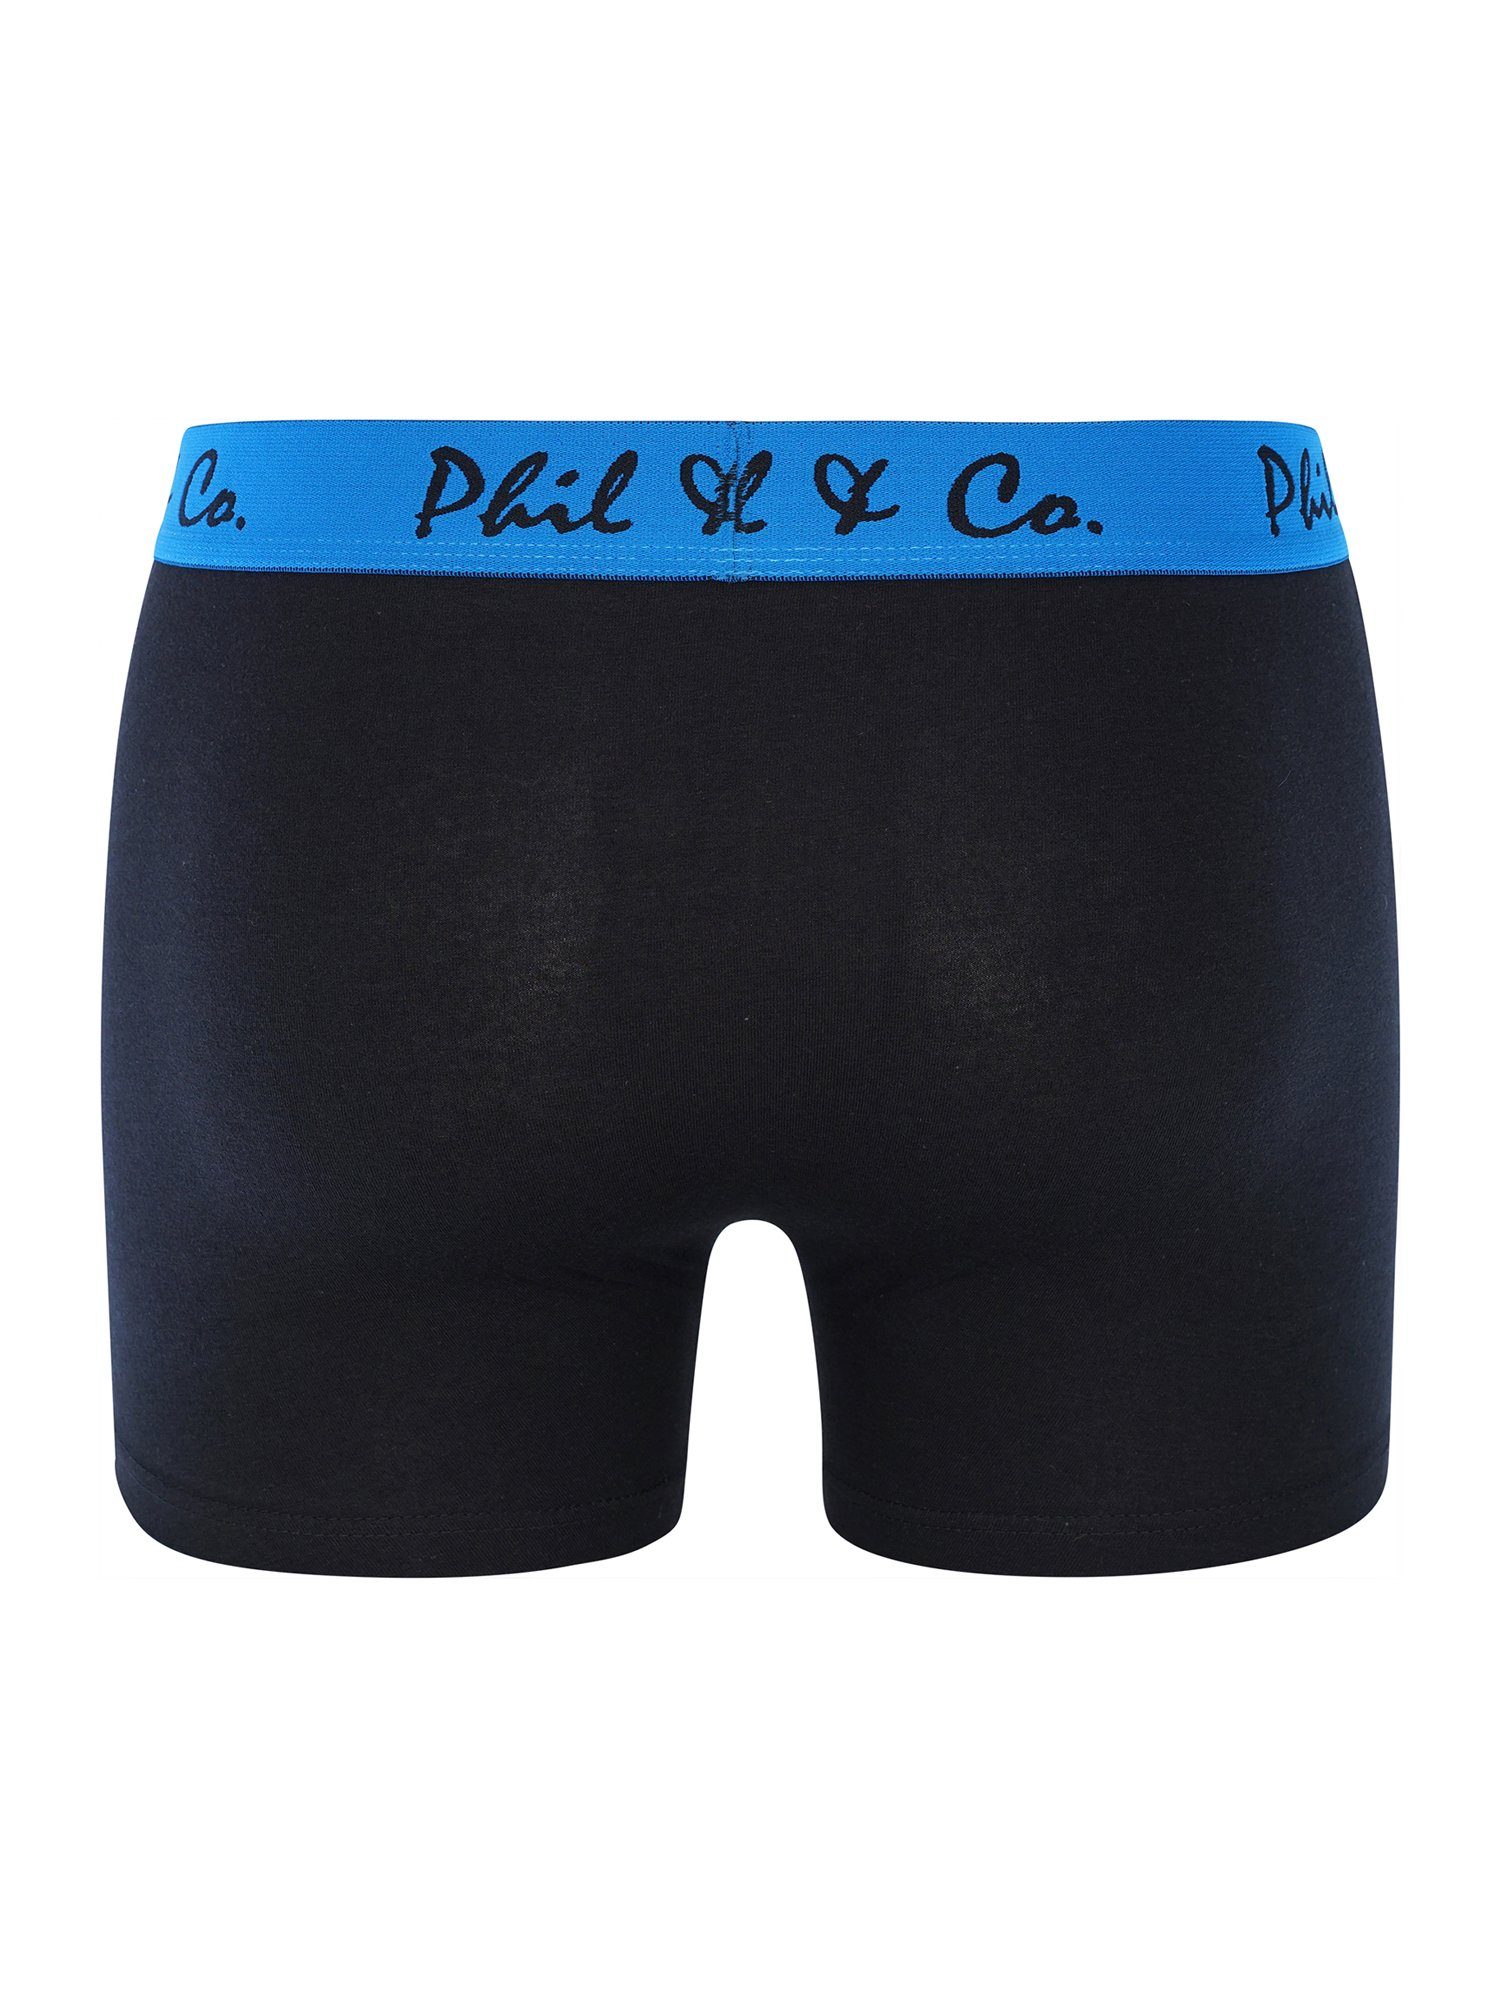 Phil & Co. Retro Pants schwarz-blau (6-St) Jersey